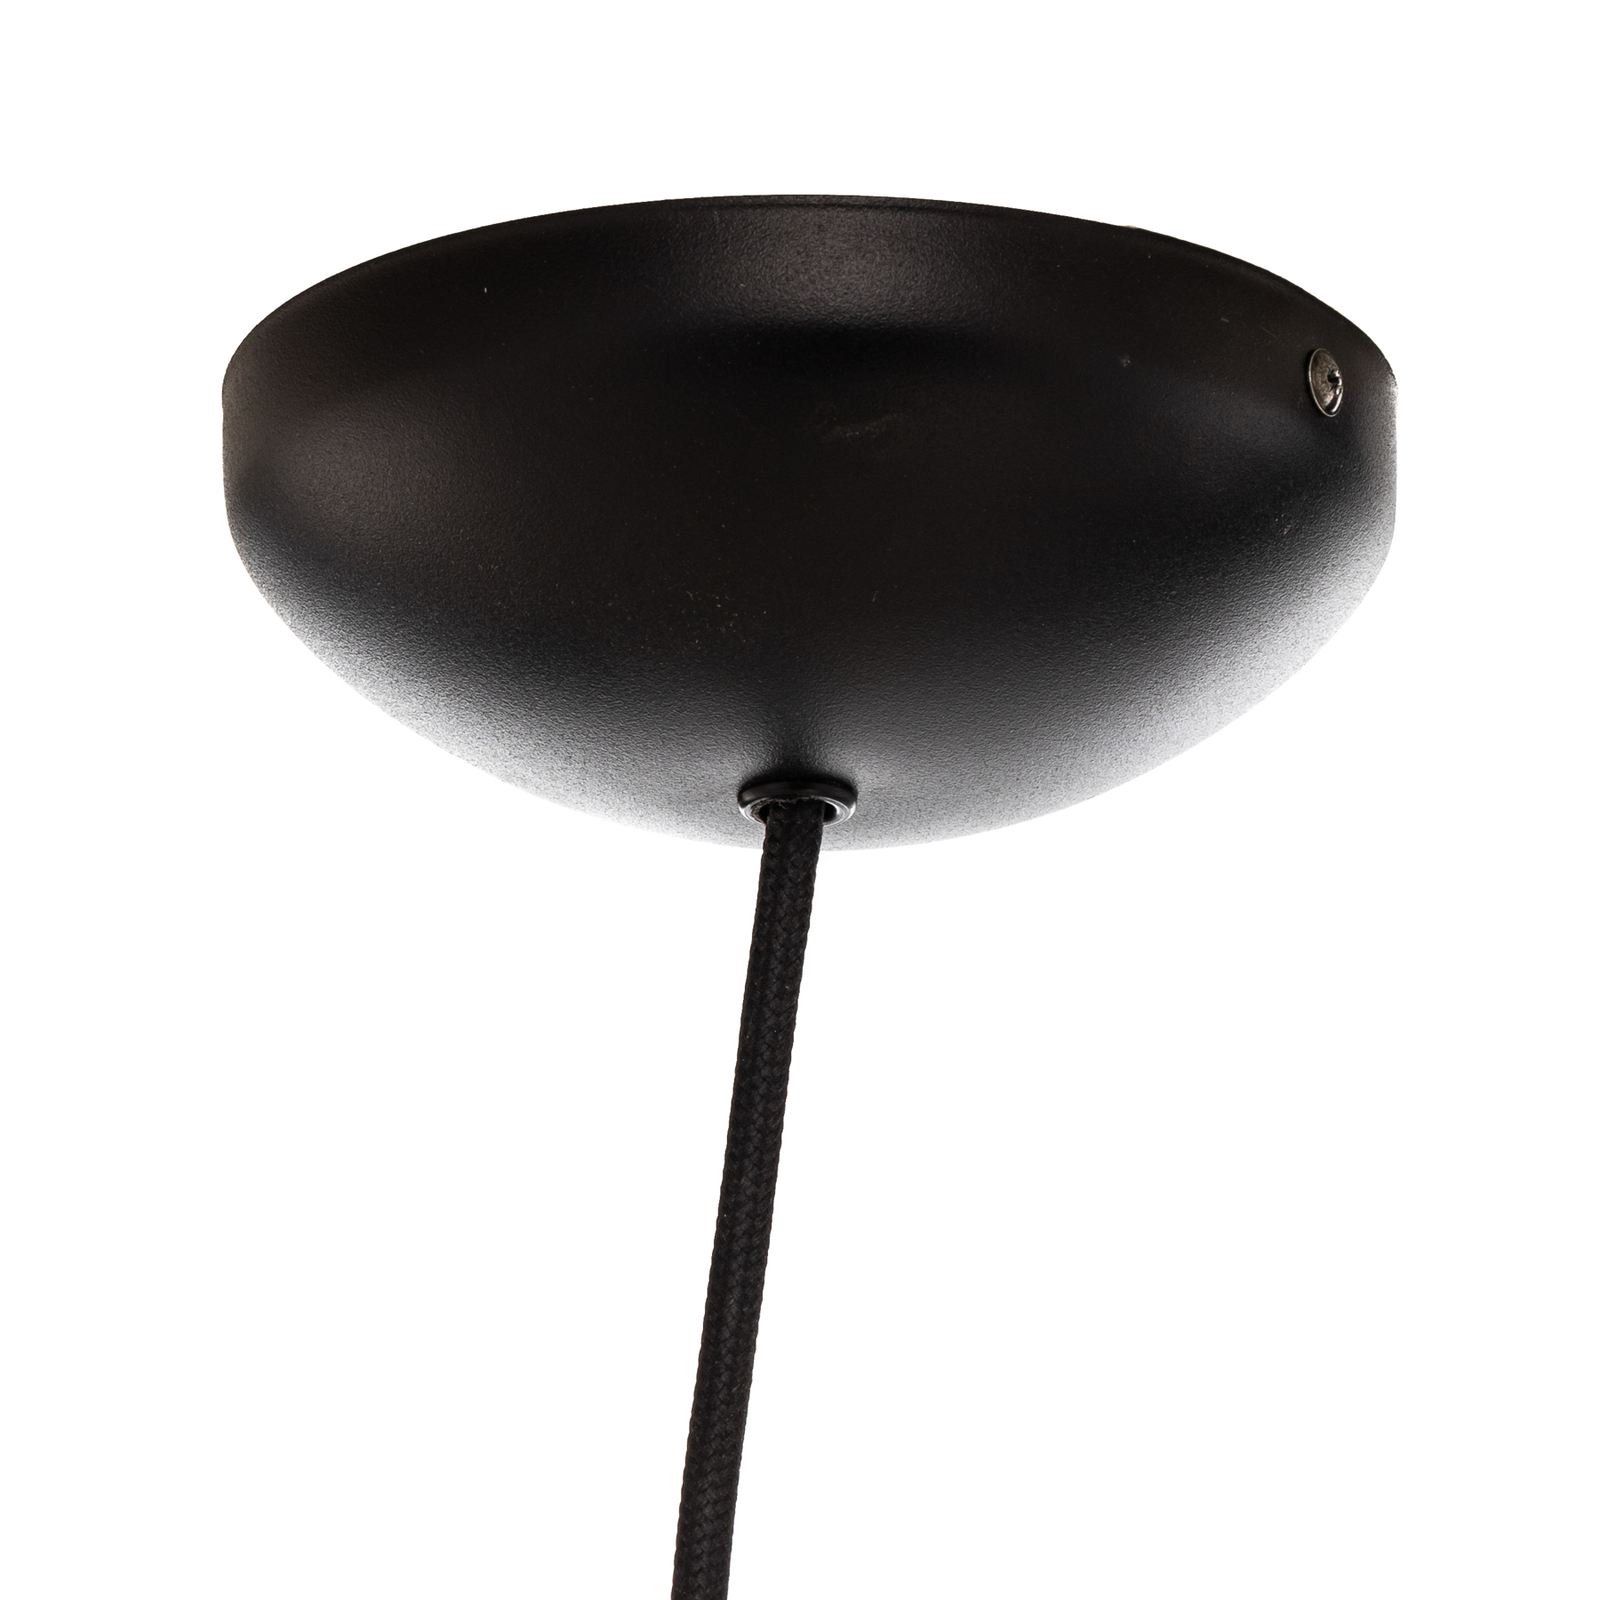 Spider hanglamp, zwart, 1-lamp